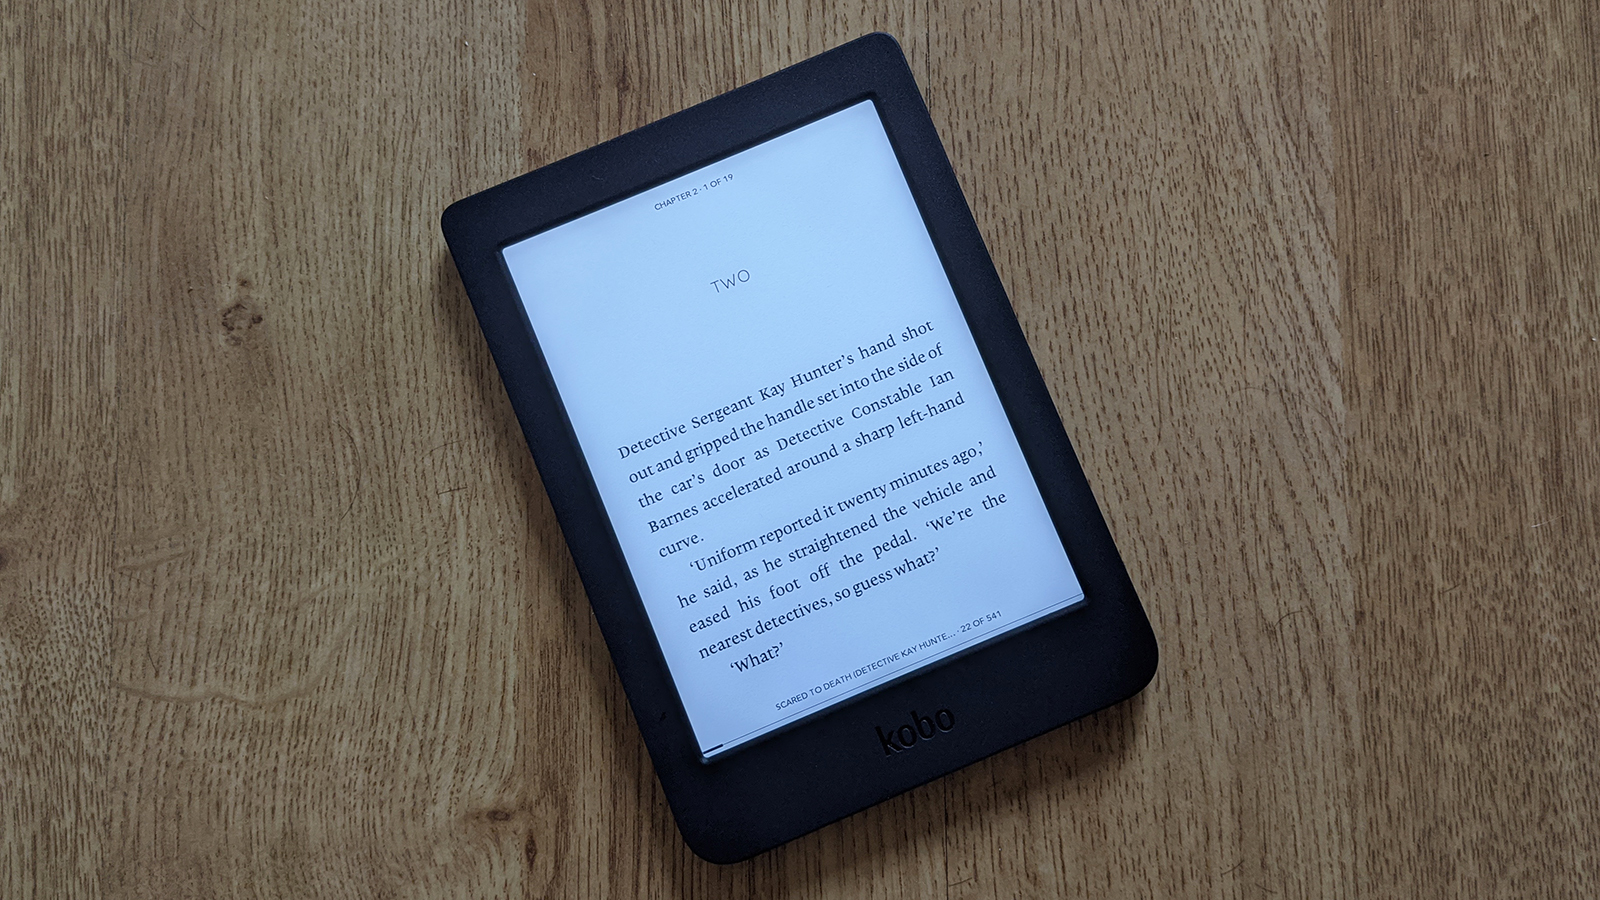 Kobo Nia review: No Kindle but Nia 'nuff